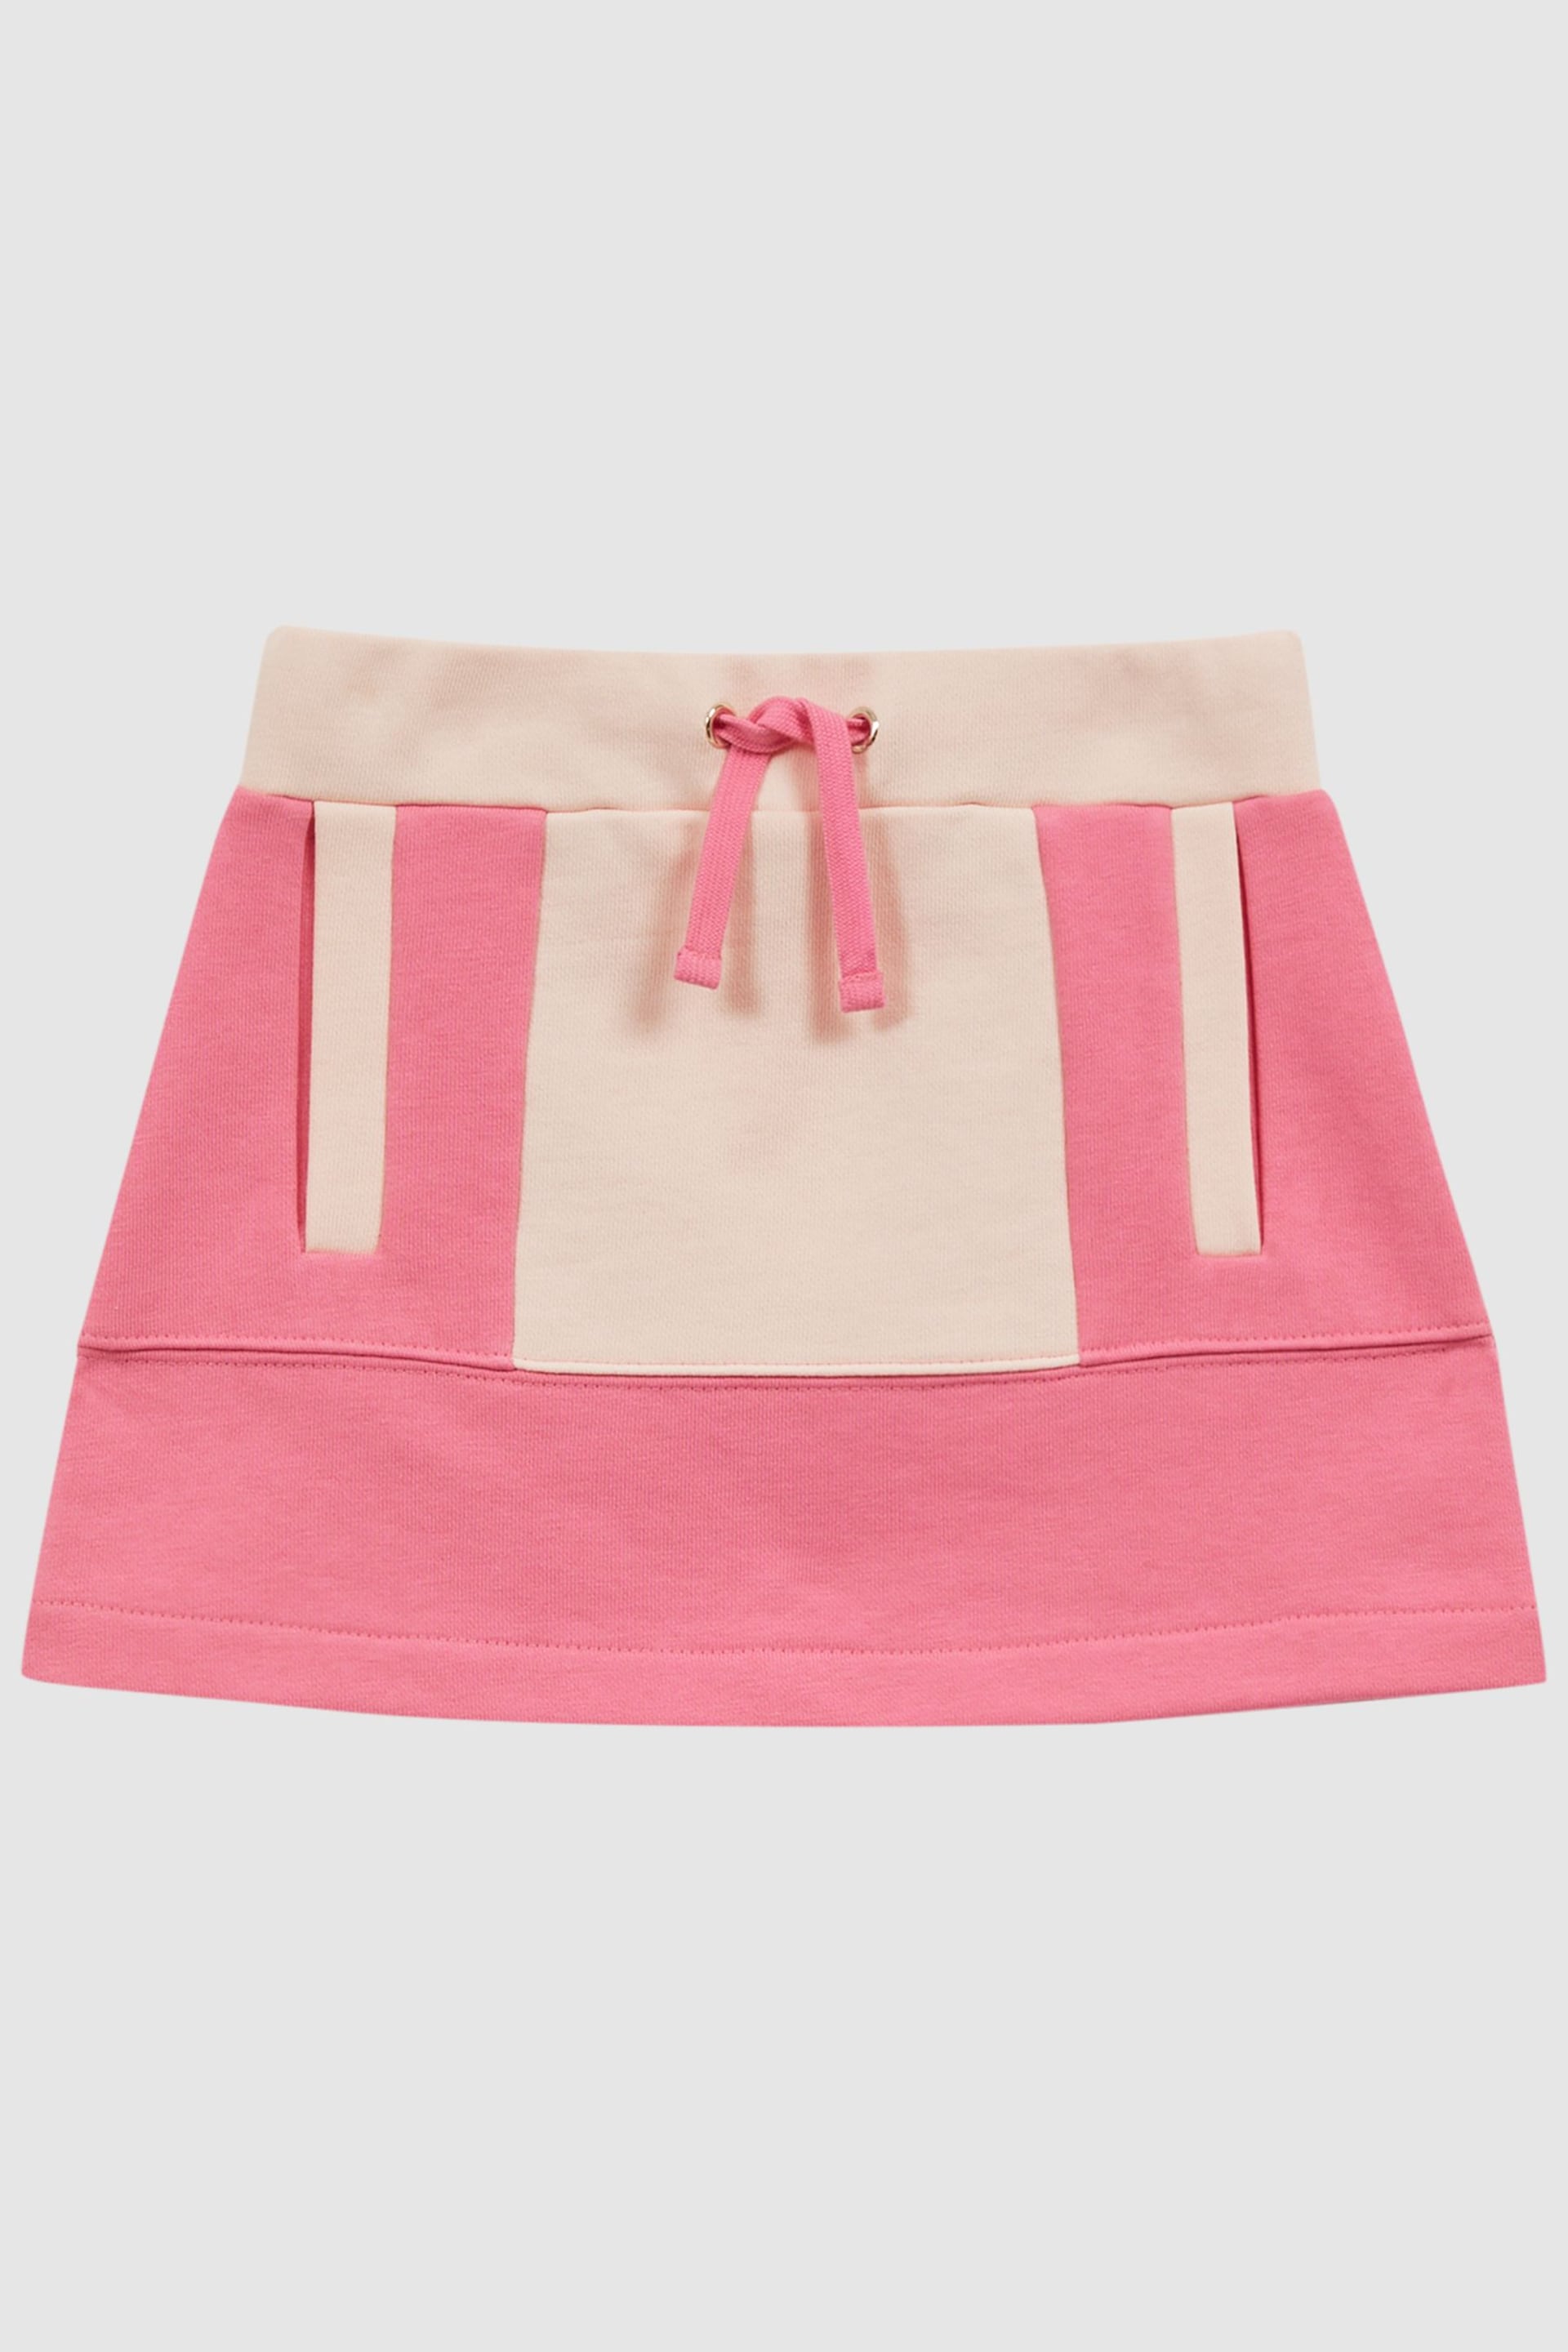 Reiss Pink Macey Junior Colourblock Cotton Drawstring Skirt - Image 2 of 6